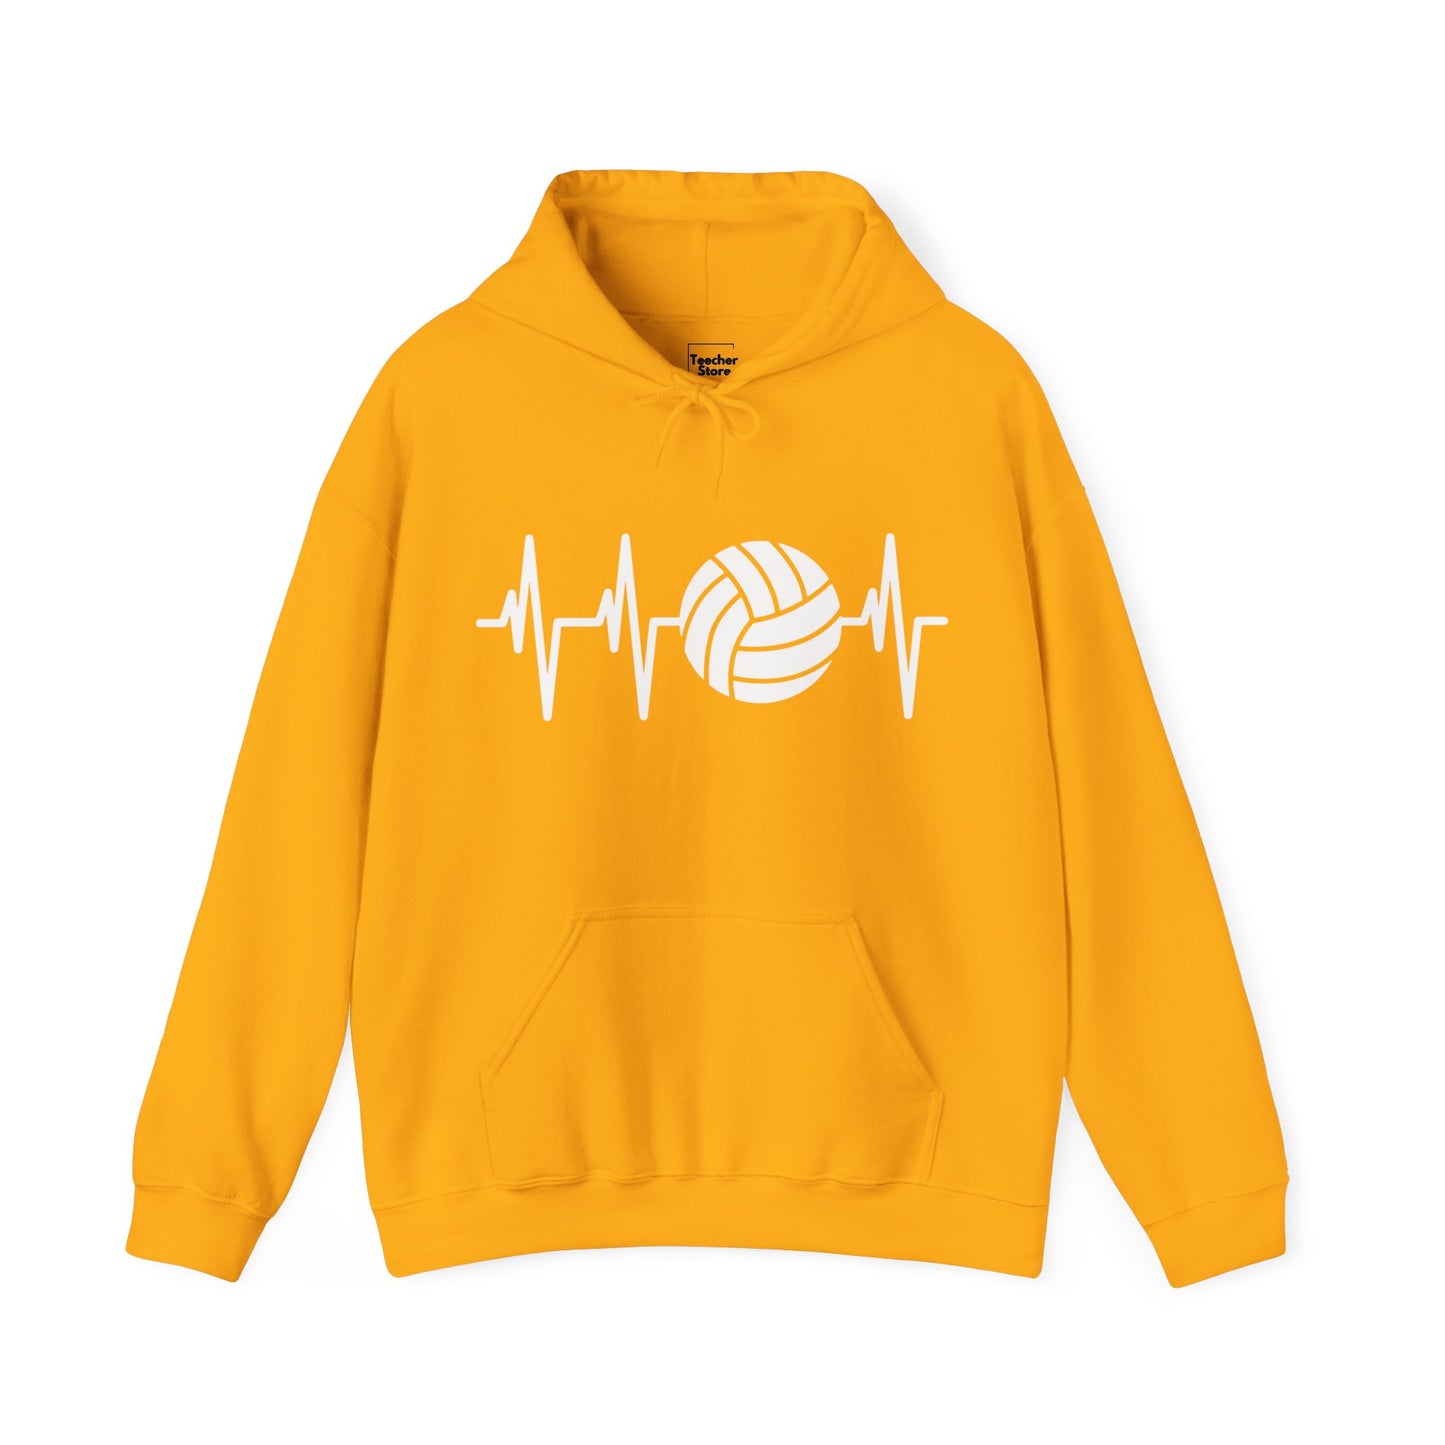 Volleyball Heartbeat Hooded Sweatshirt